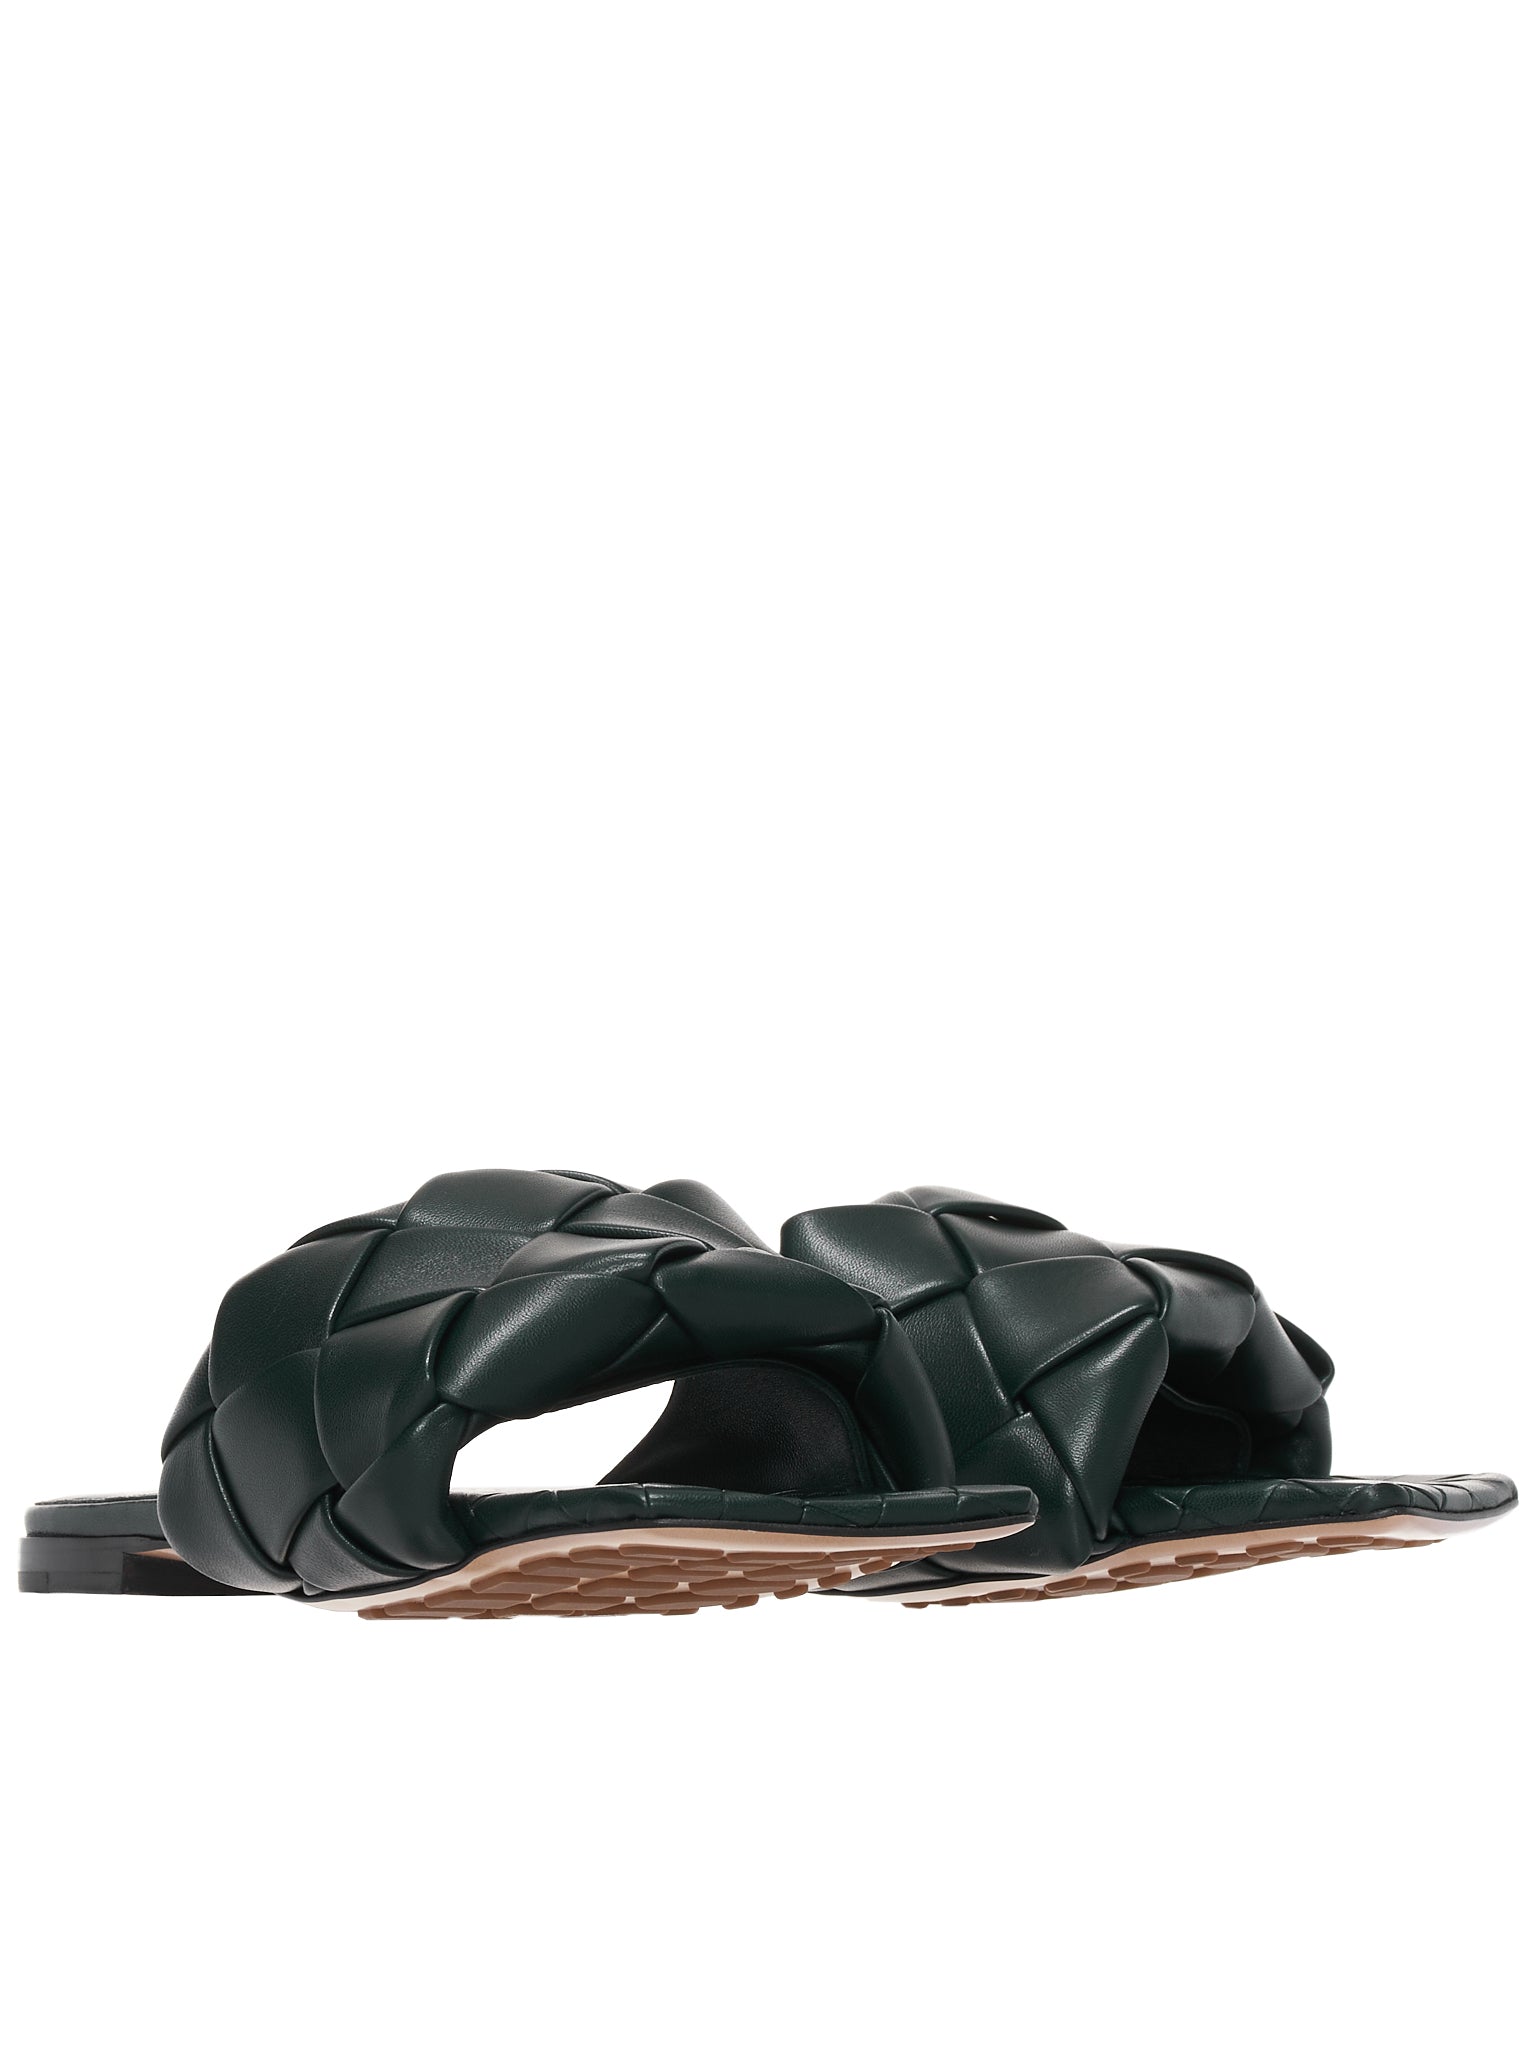 Bottega Veneta The Lido Flat Sandals | H. Lorenzo - detail 1